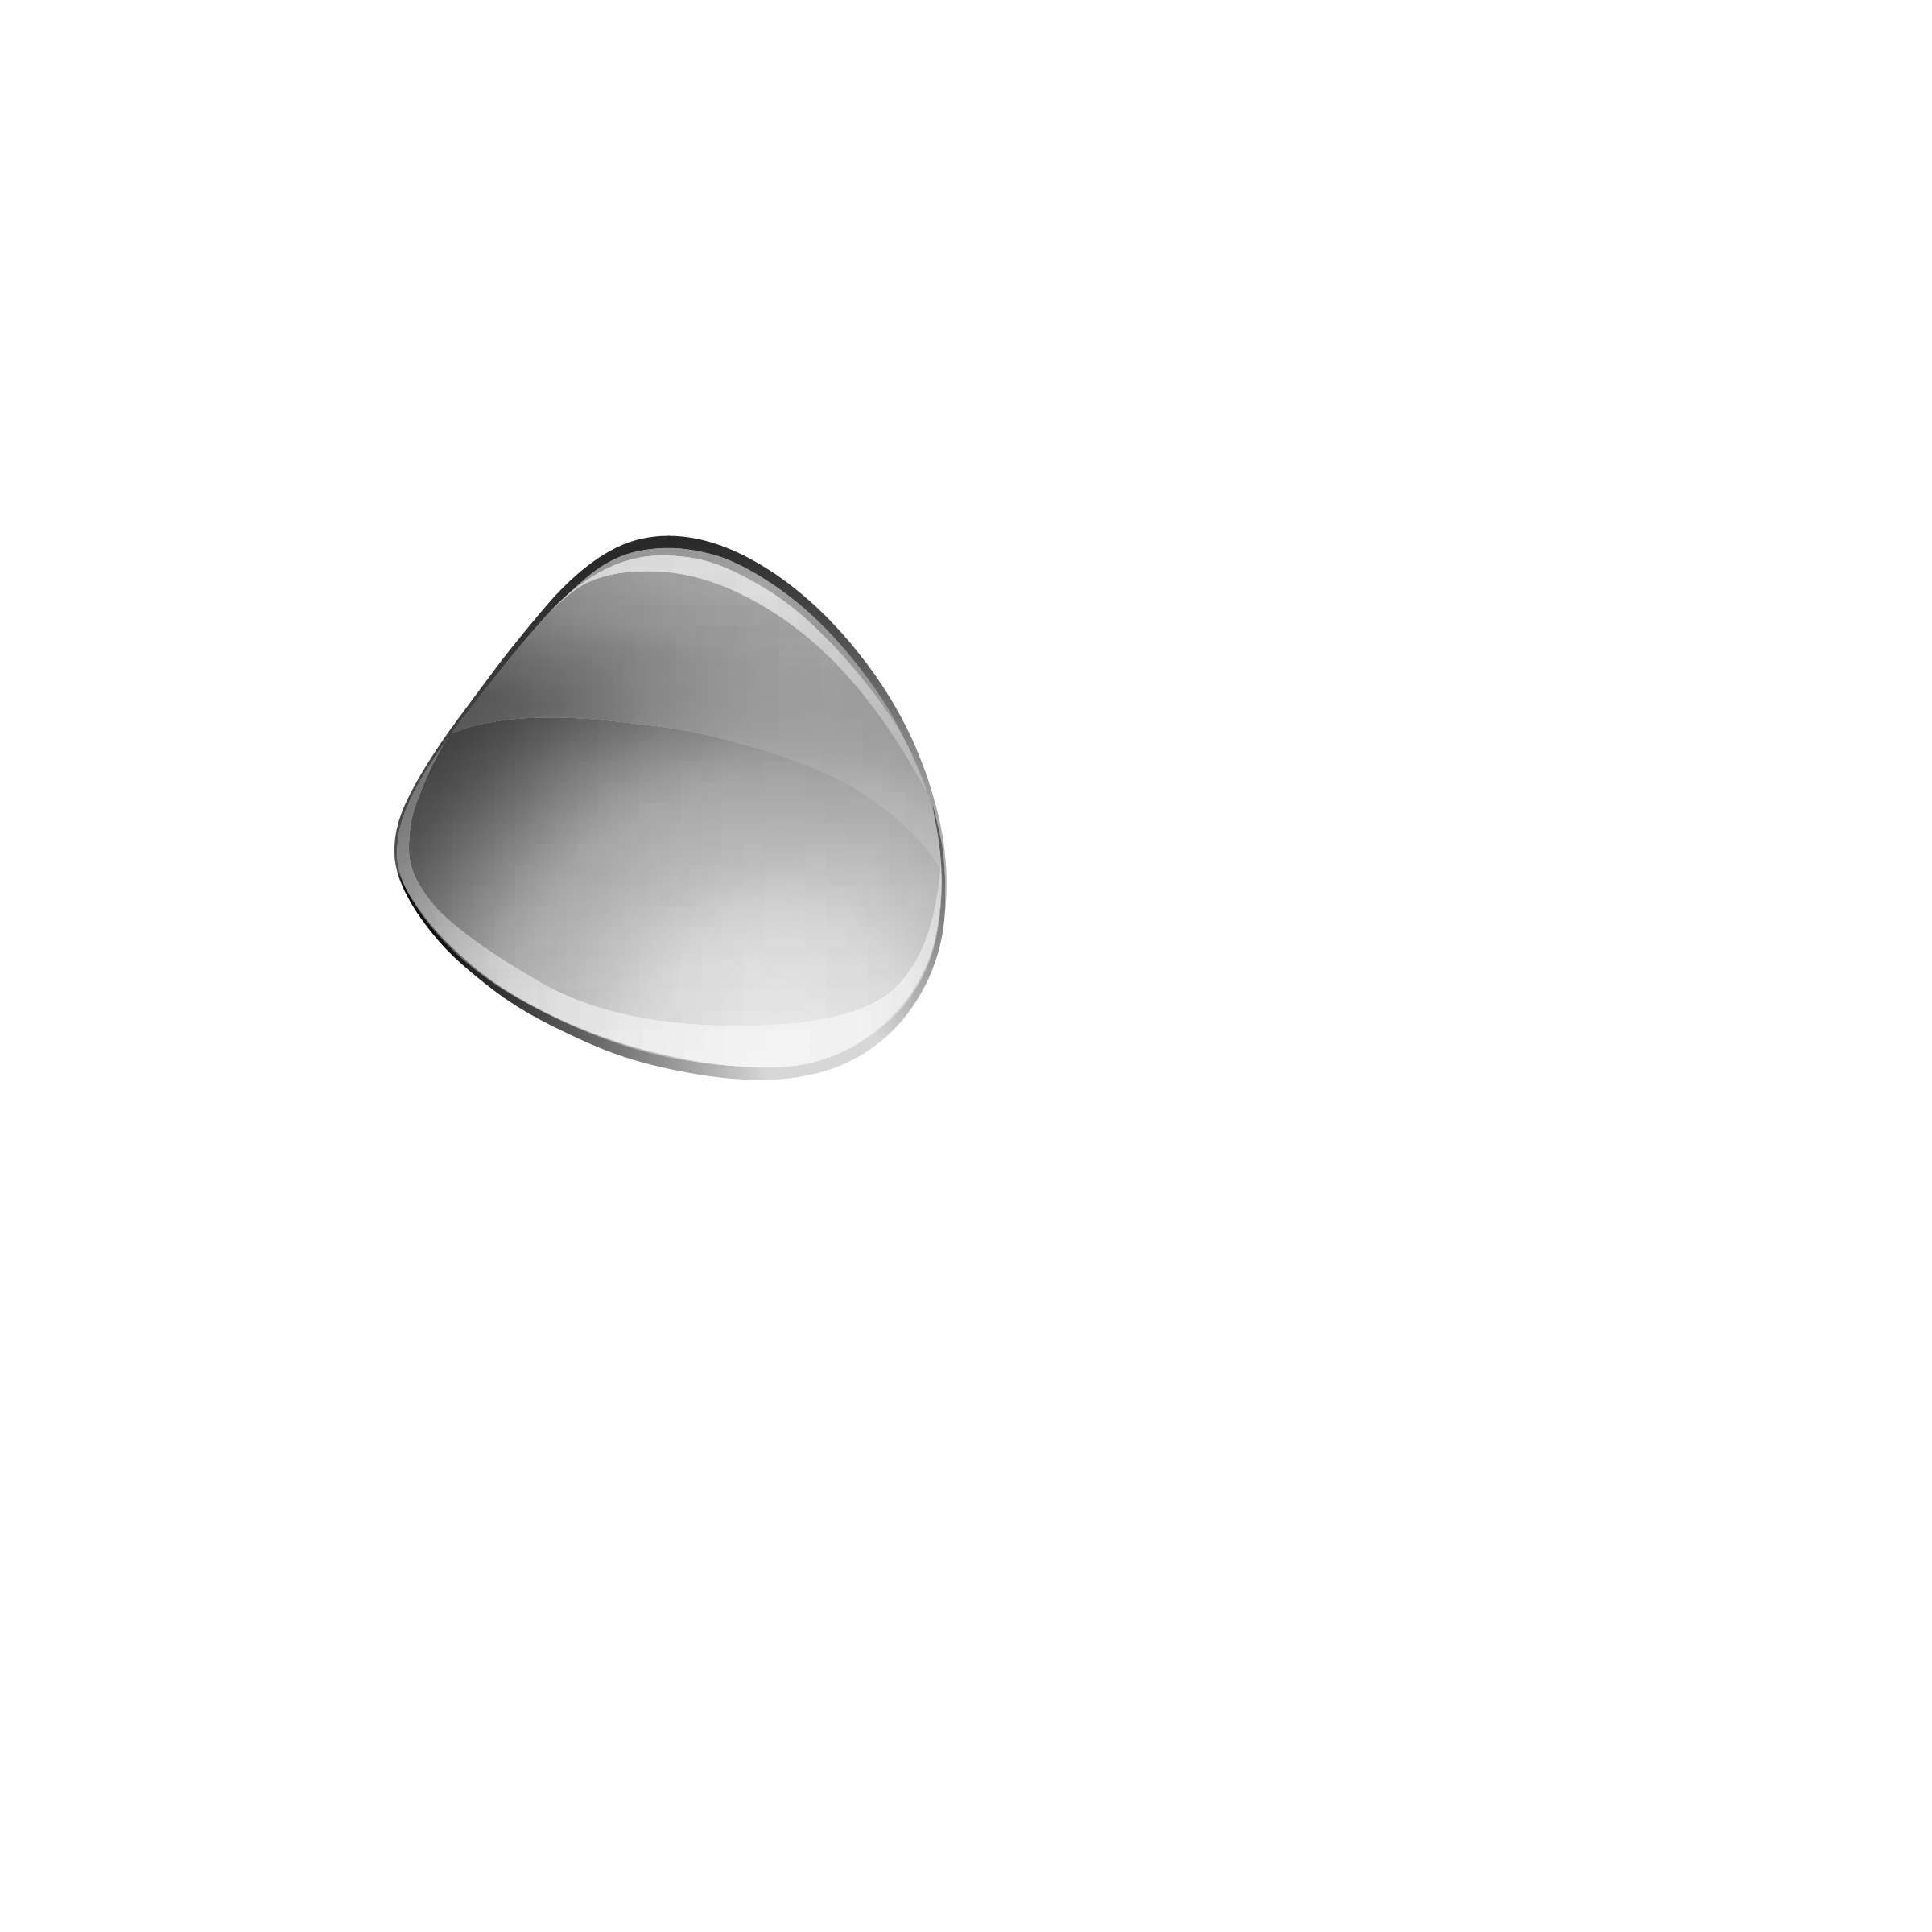 OE Cam Logotype - Black and White - Designed by Peek Creative